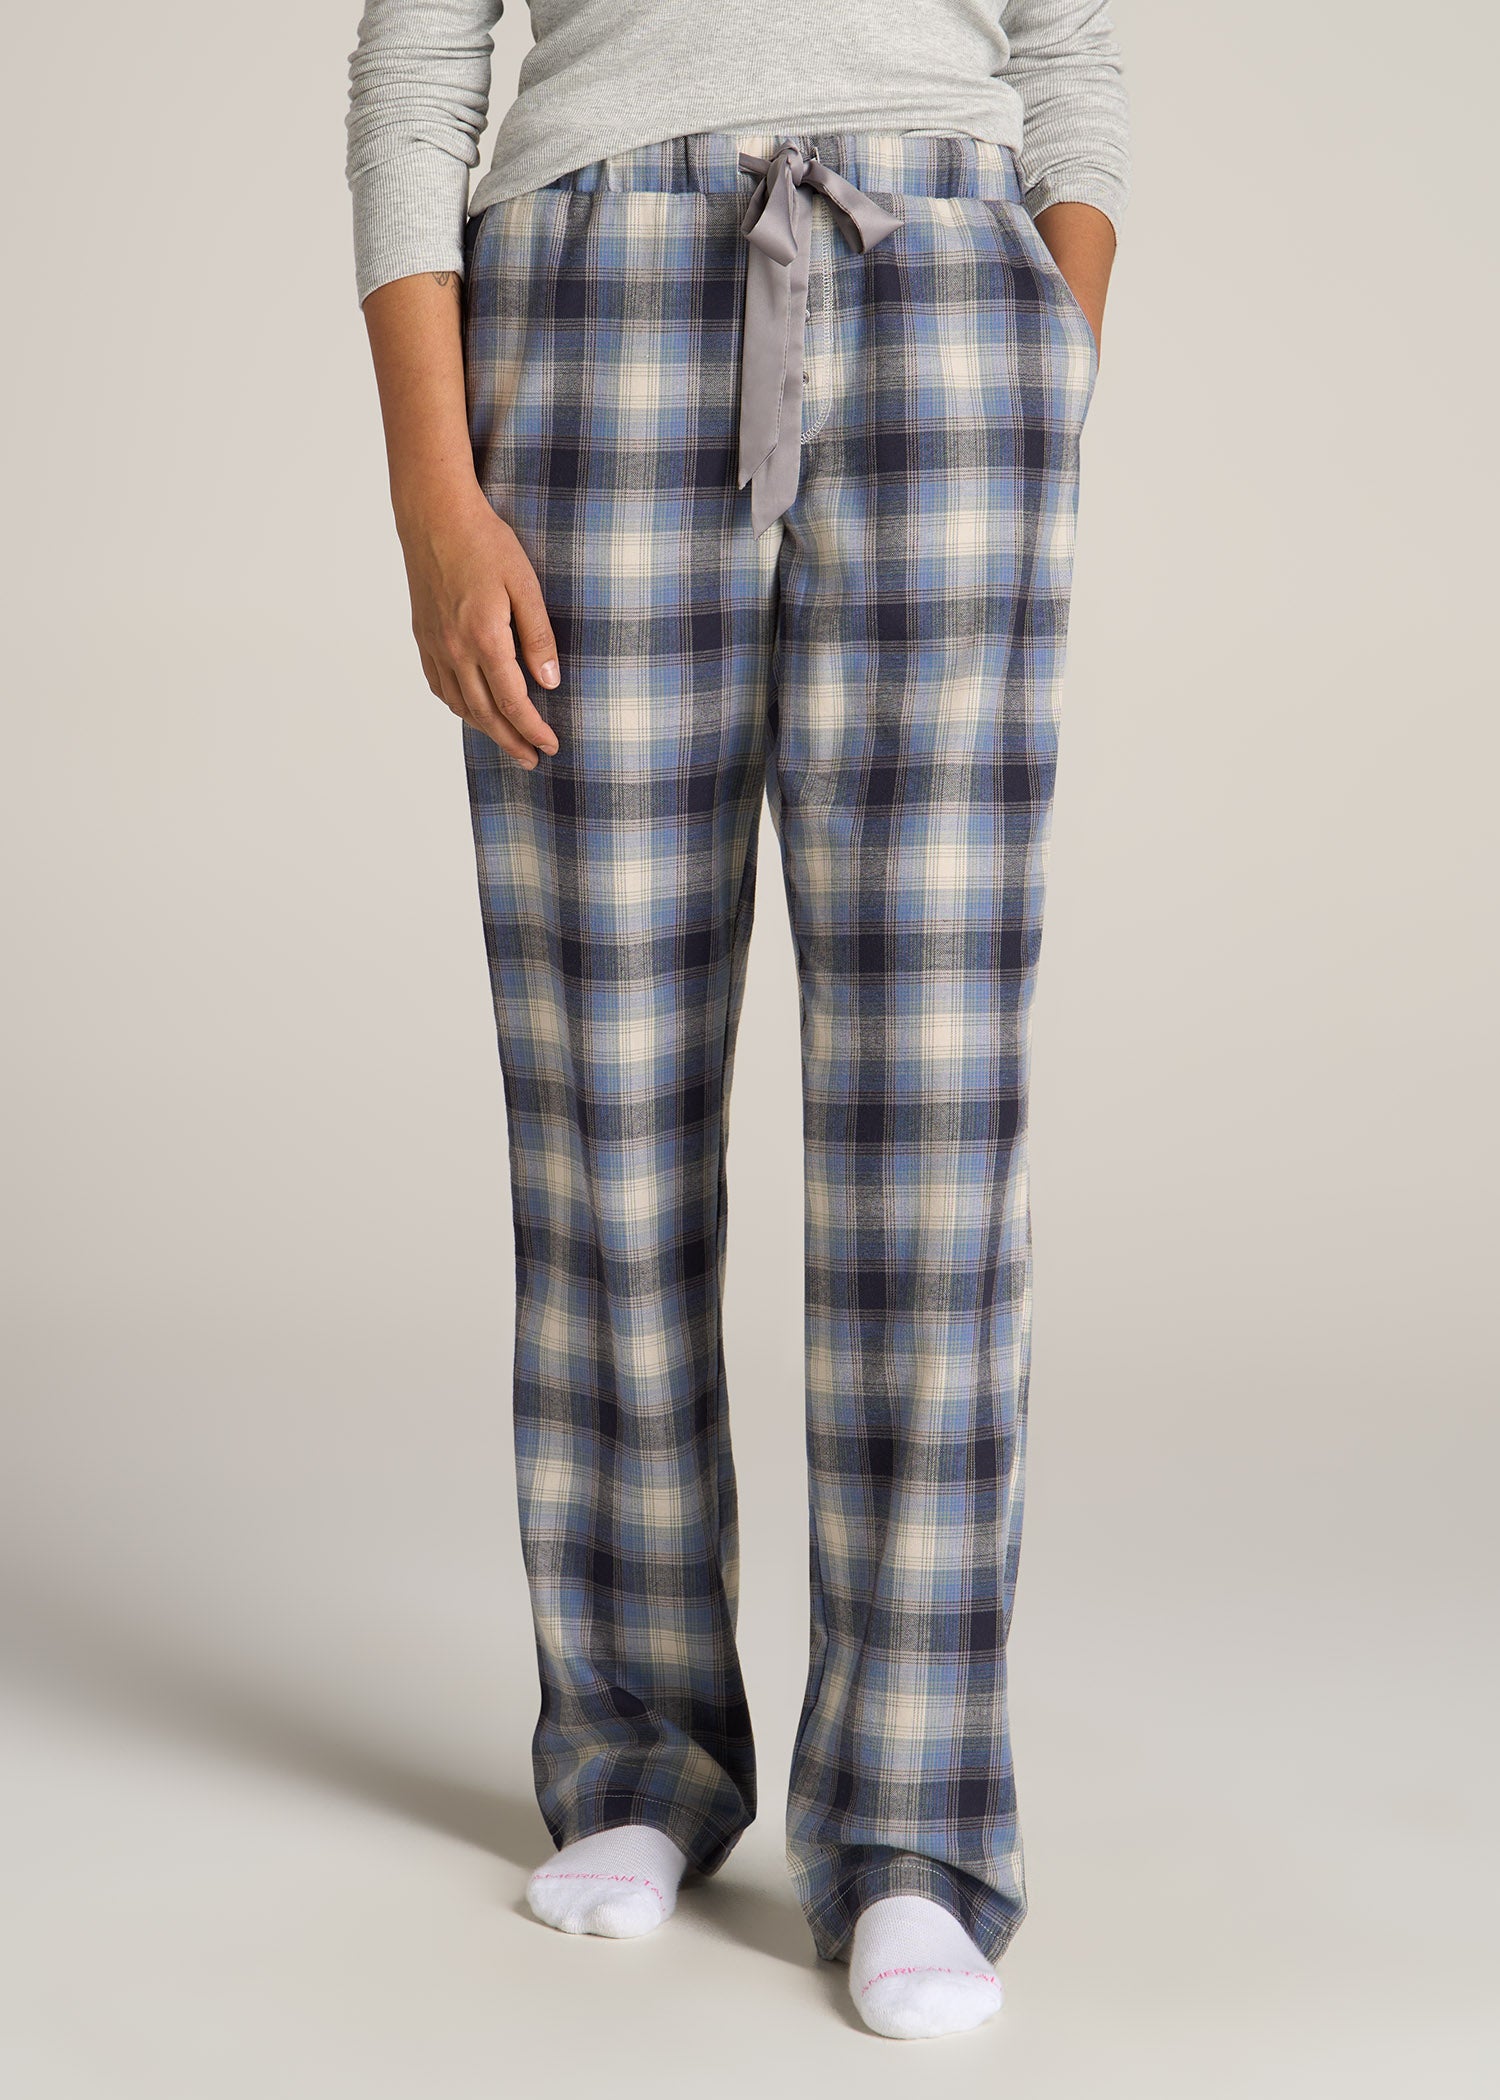 Women Plaid Pajama Pants Sleepwear, Women Lounge Pants Comfy With P